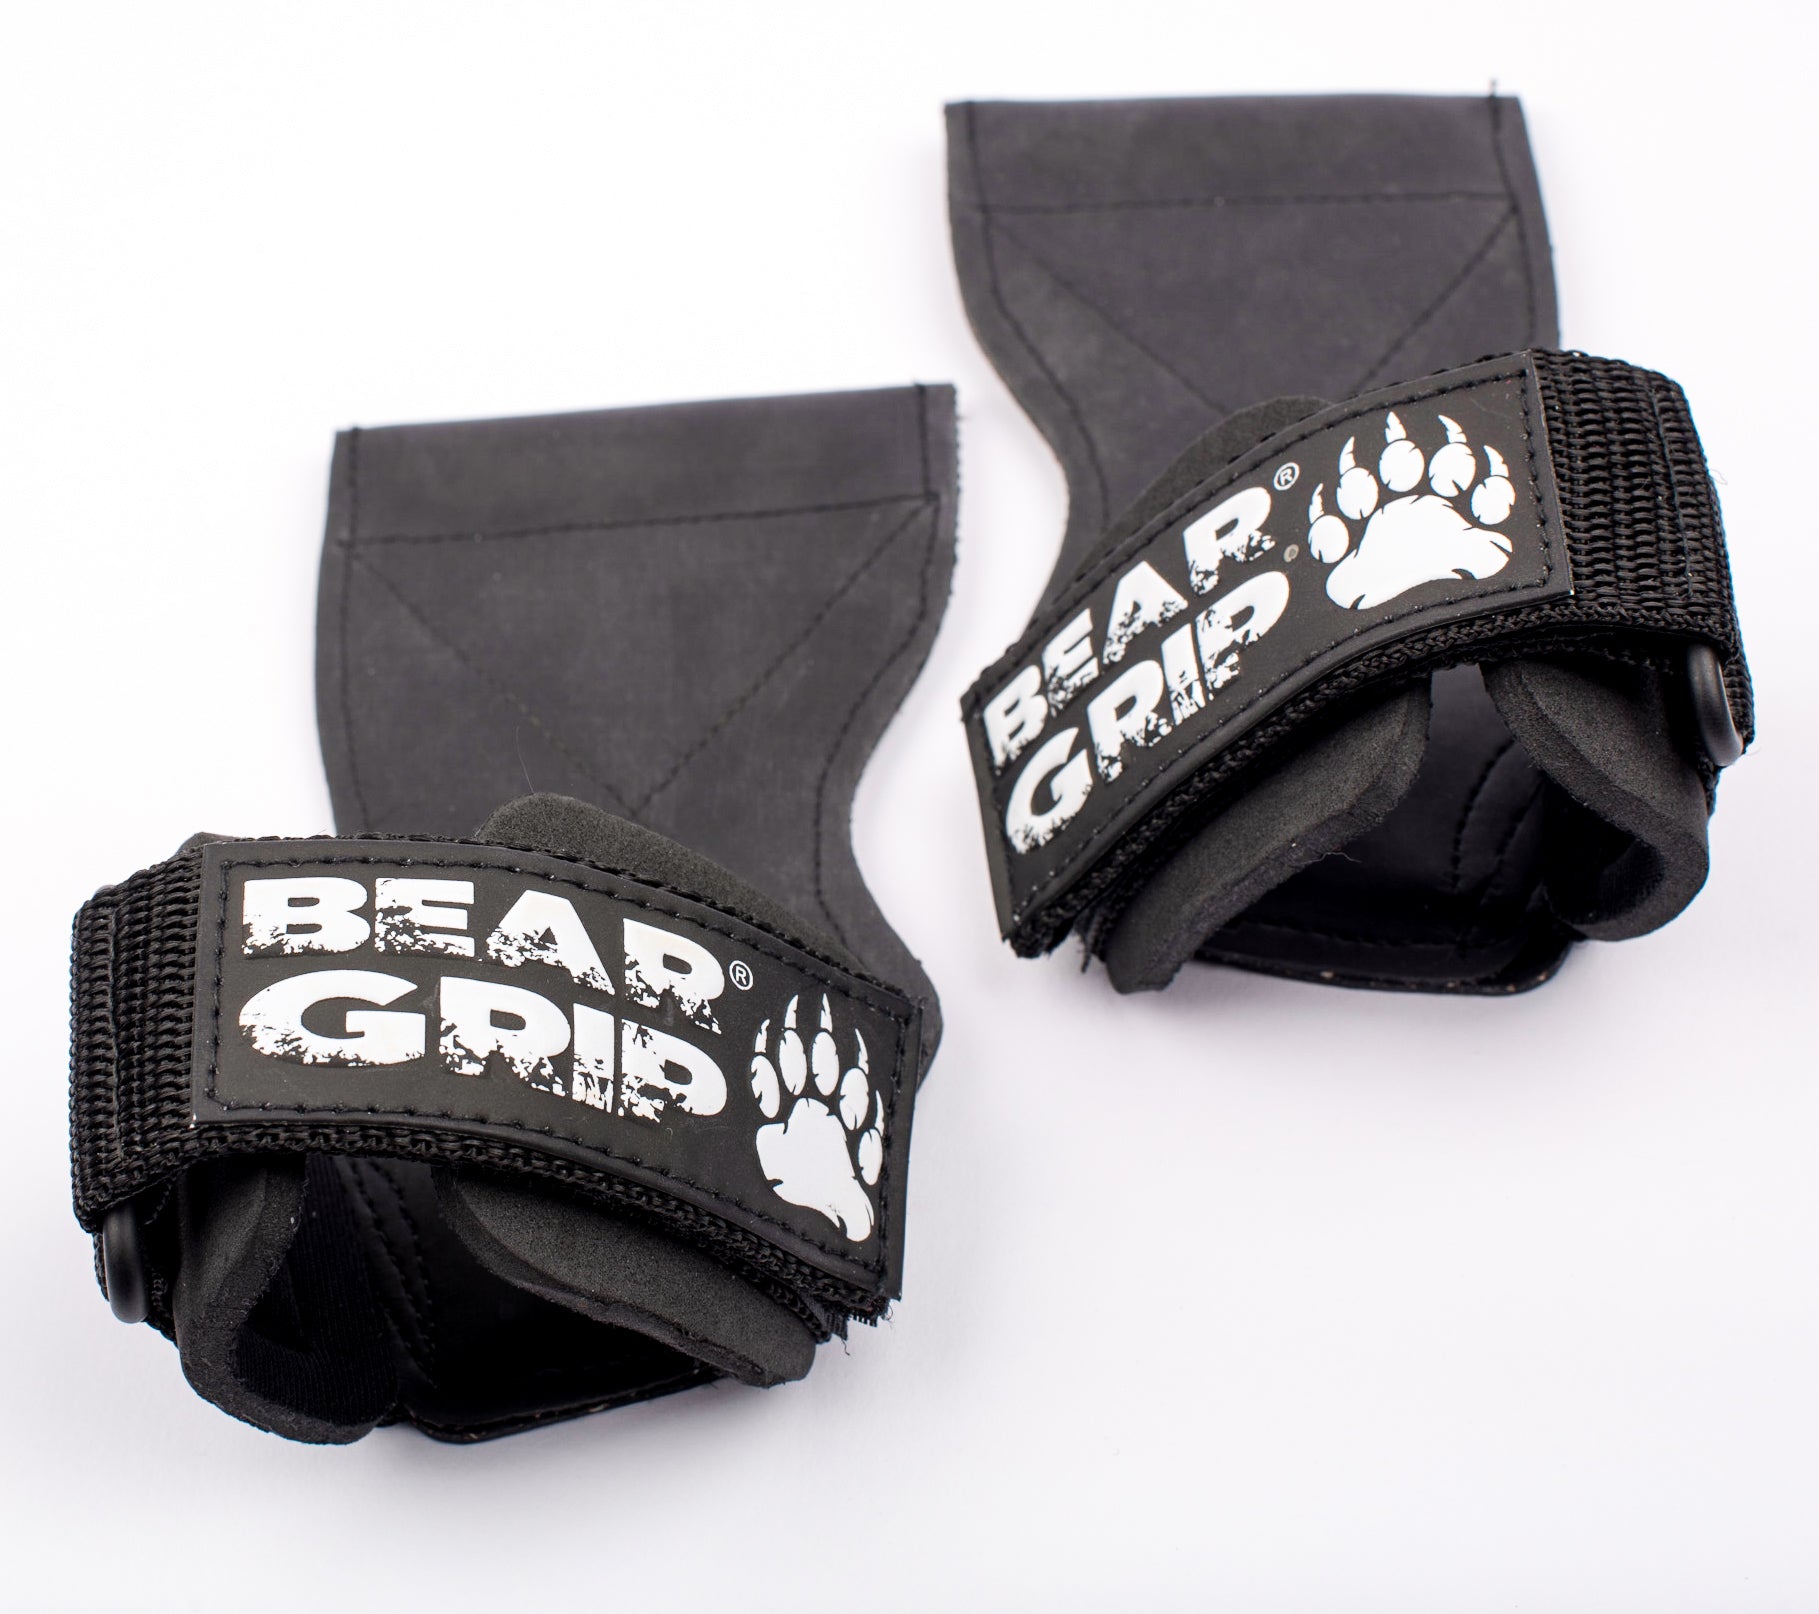 BEAR GRIP® - Multi Grip Straps/Hooks, Premium Heavy duty weight lifting straps / gloves.